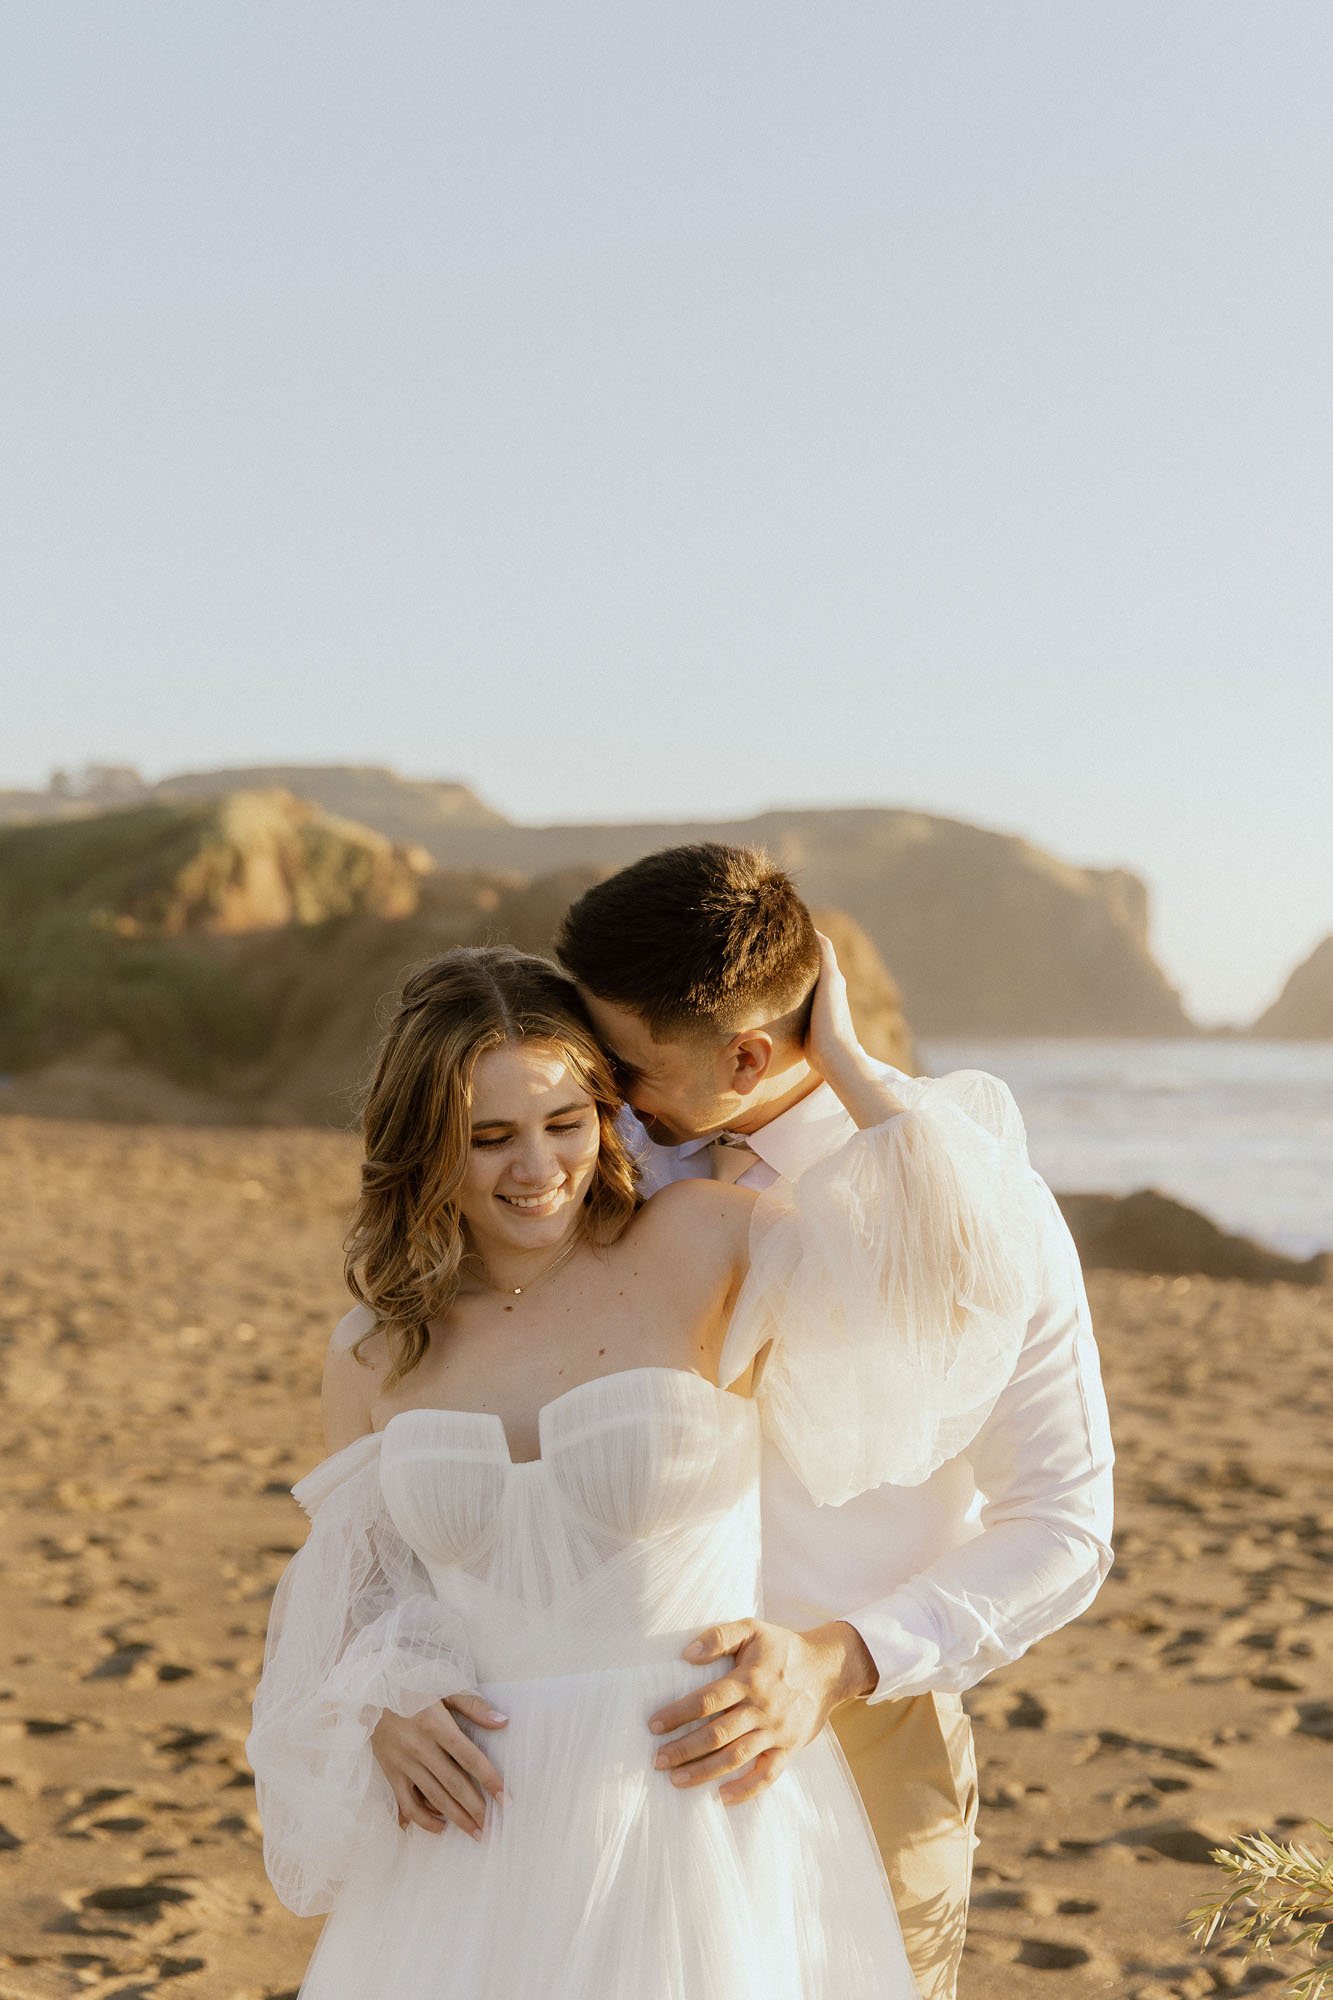 Alena-Leena-Armeria-Wedding-Dress-Rodeo-Beach-Elopement-03.jpg